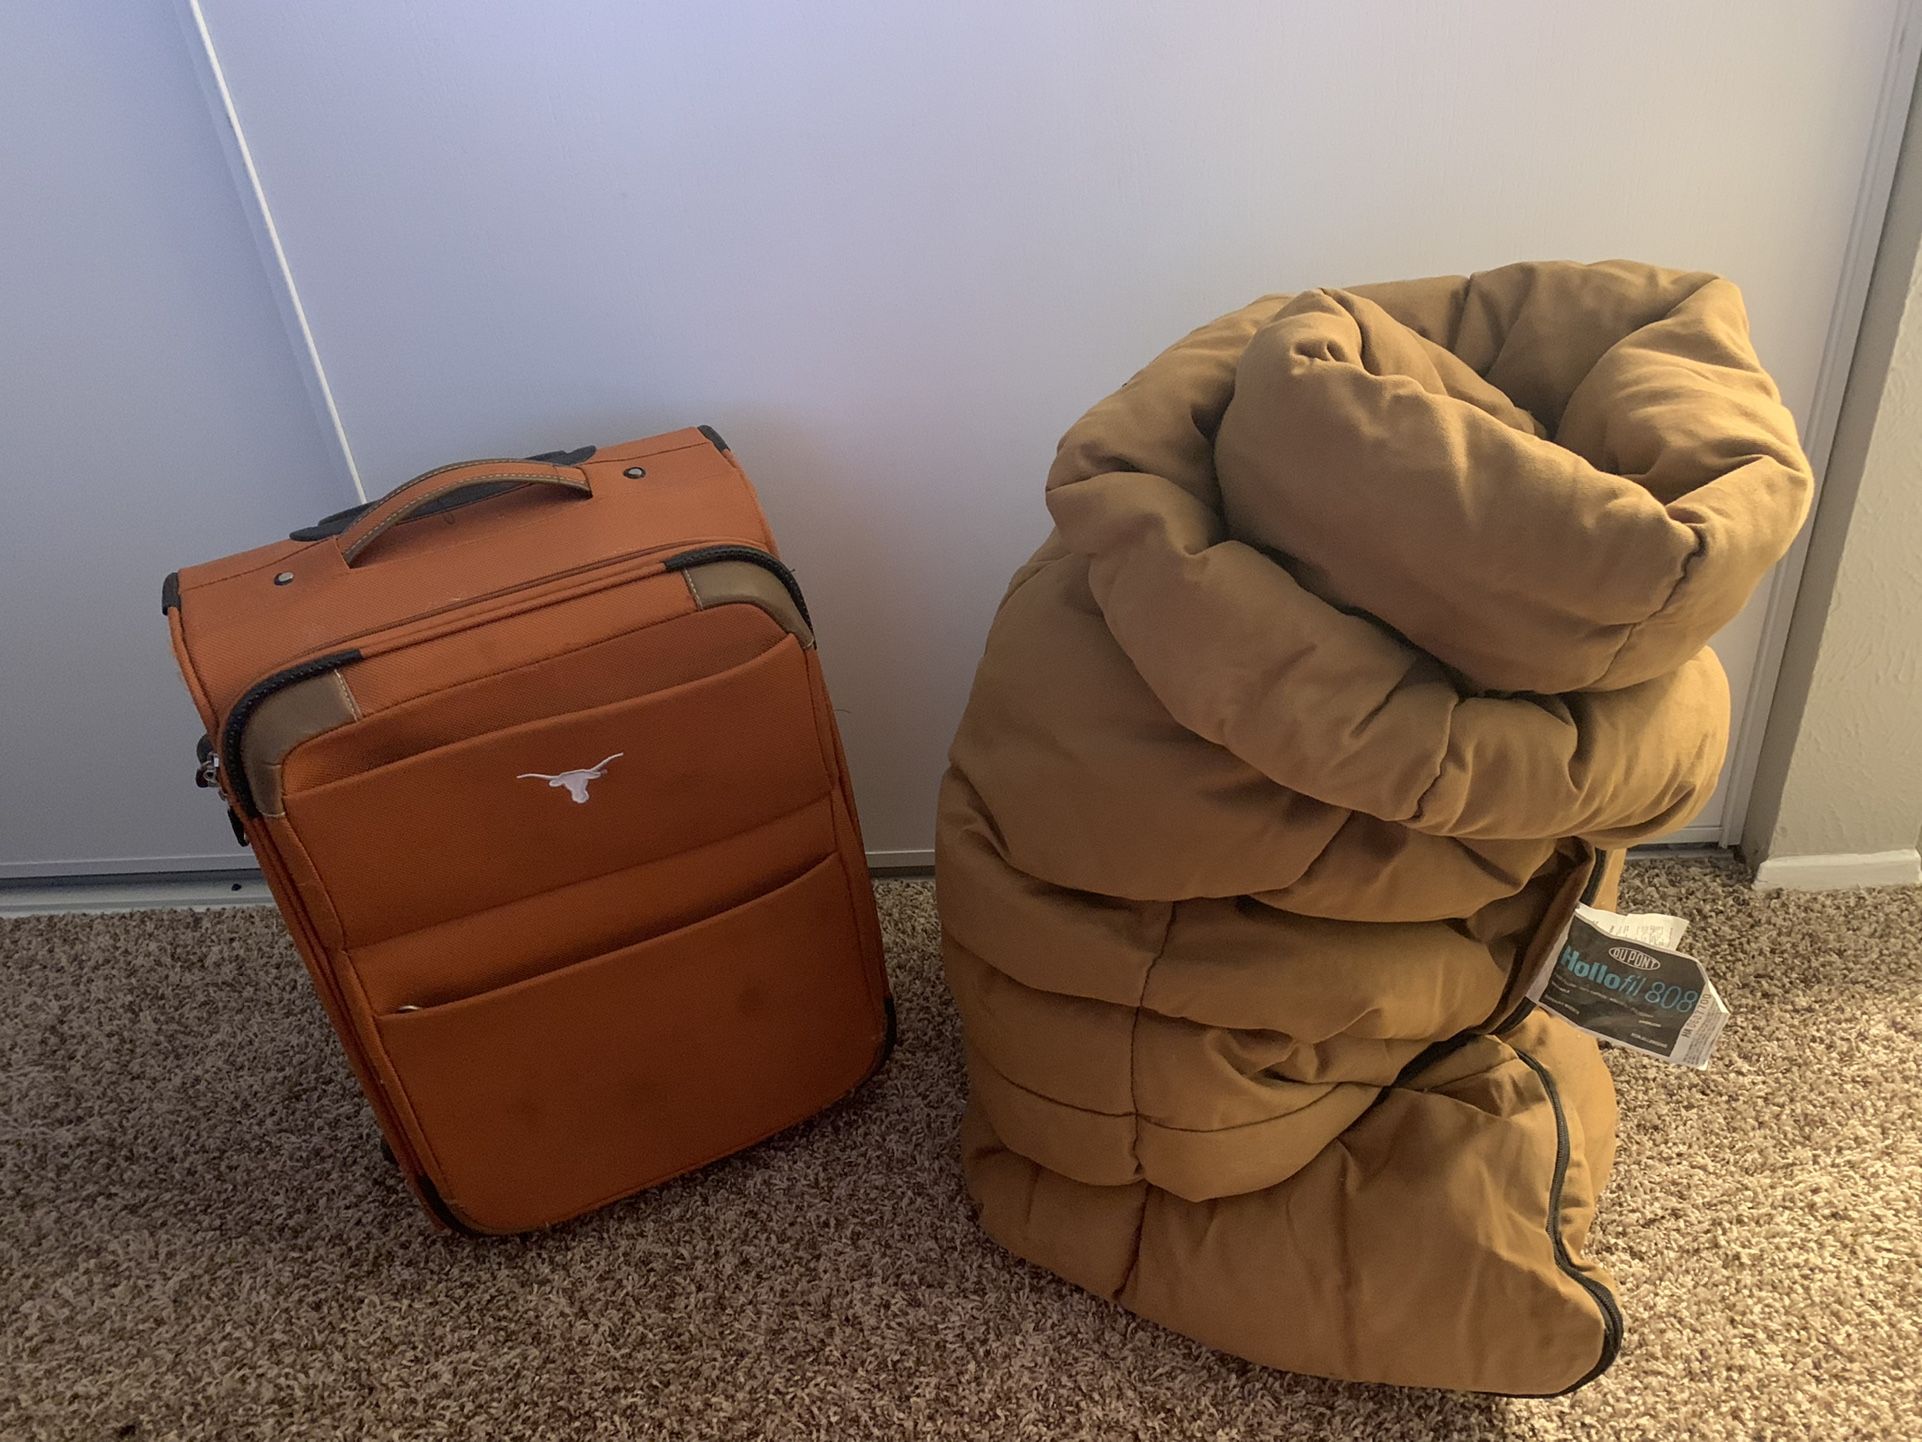 Suitcase & Sleeping Bag